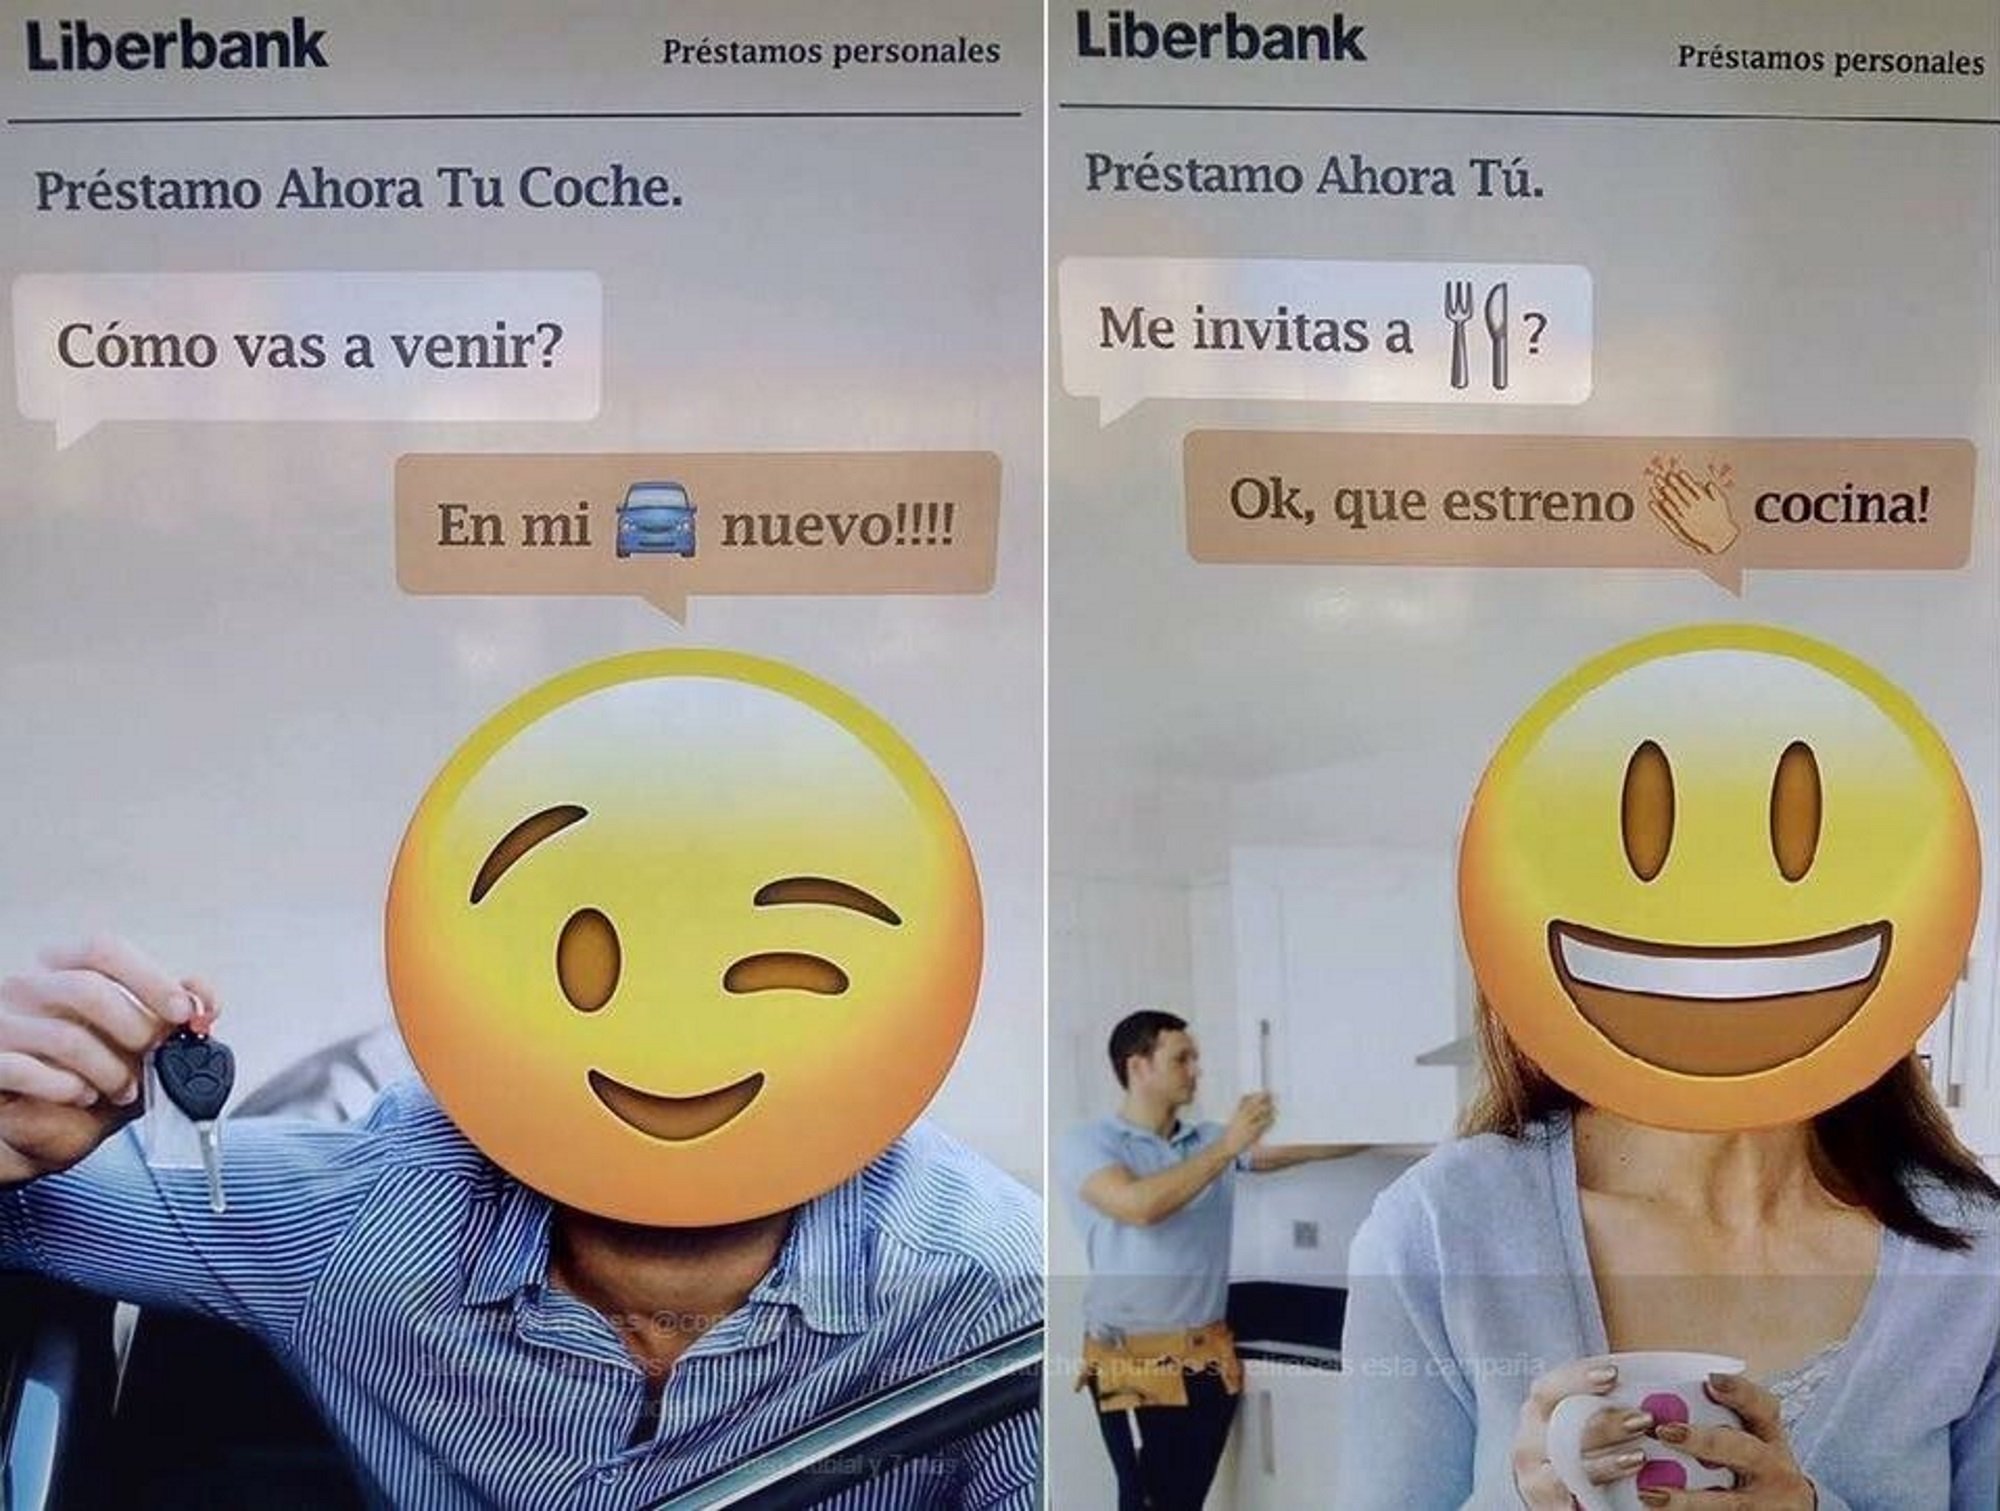 Polémica por el anuncio sexista de Liberbank